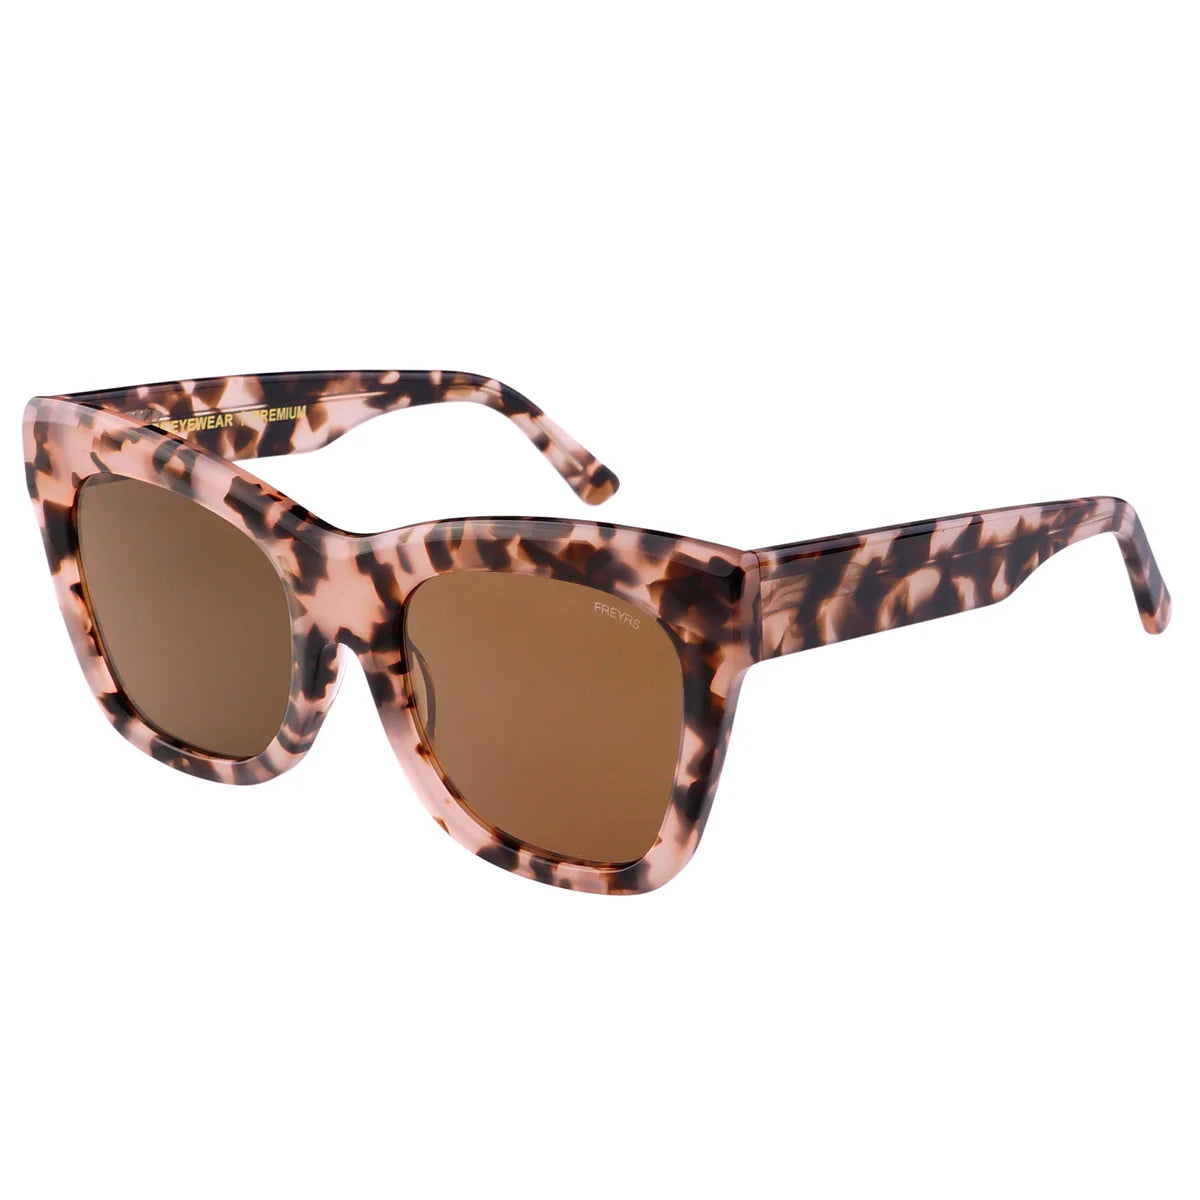 PALERMO Sunglasses in Pink Tortoise by Freyrs Eyewear